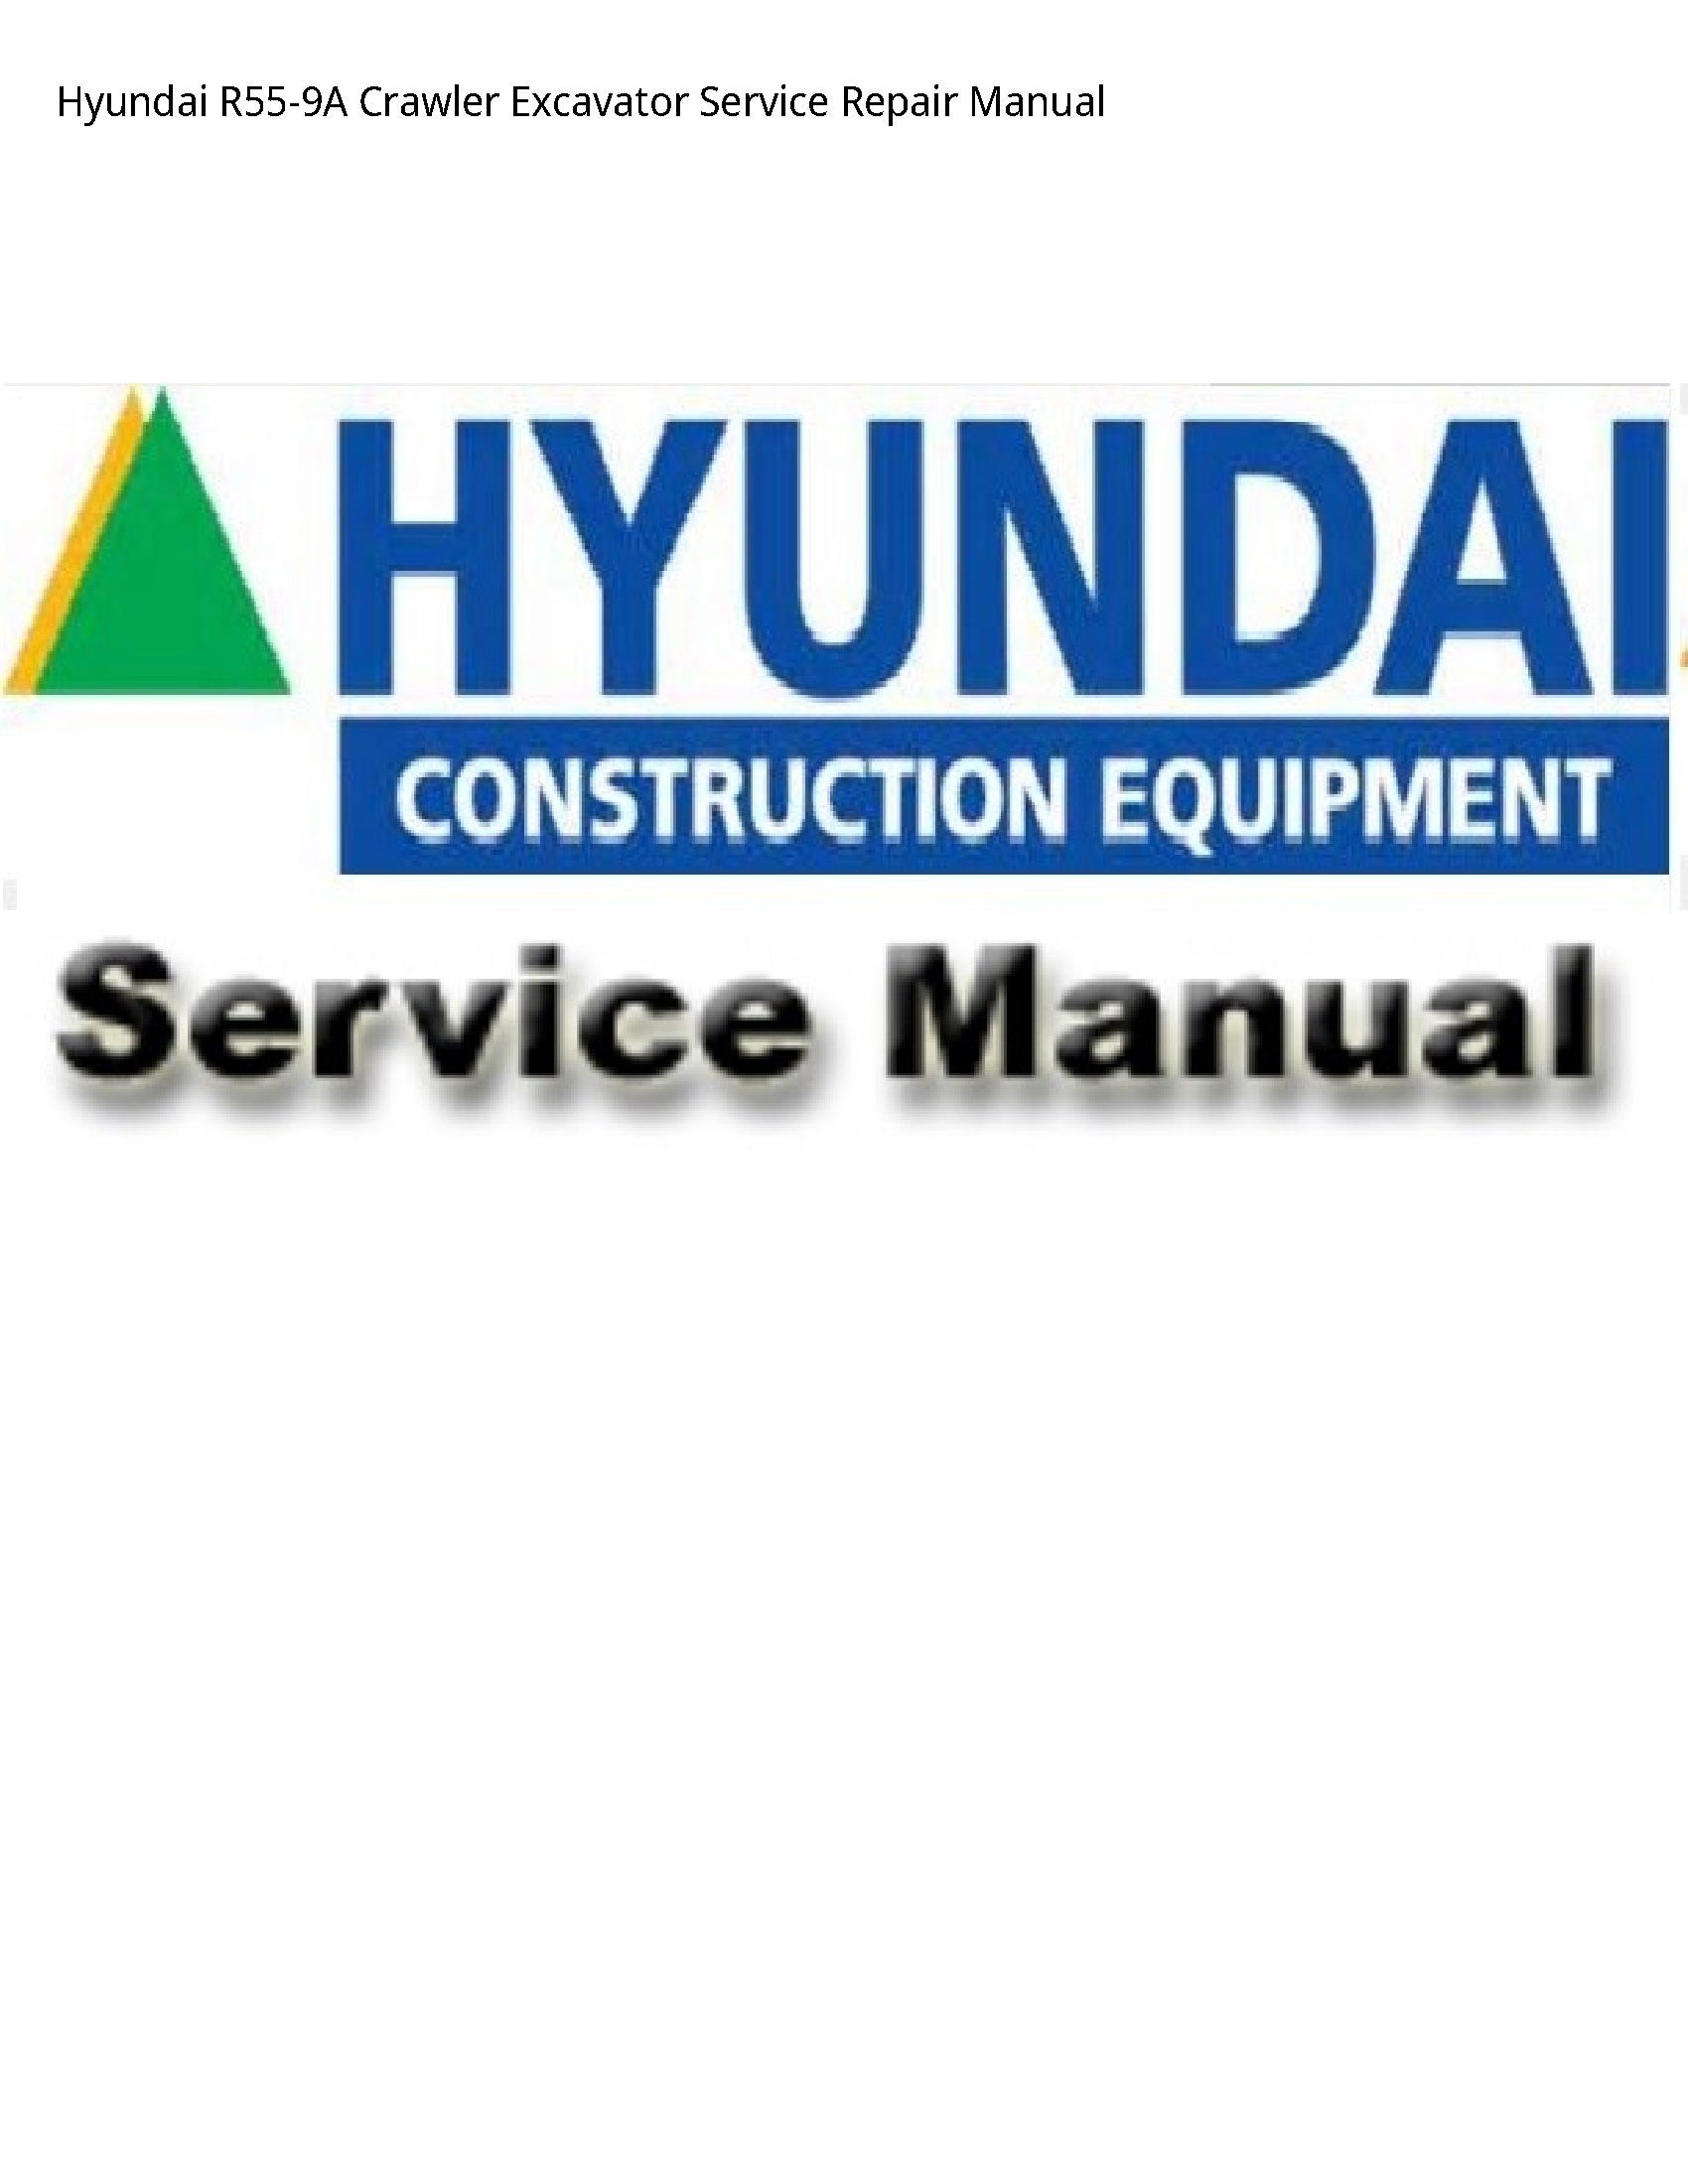 Hyundai R55-9A Crawler Excavator manual